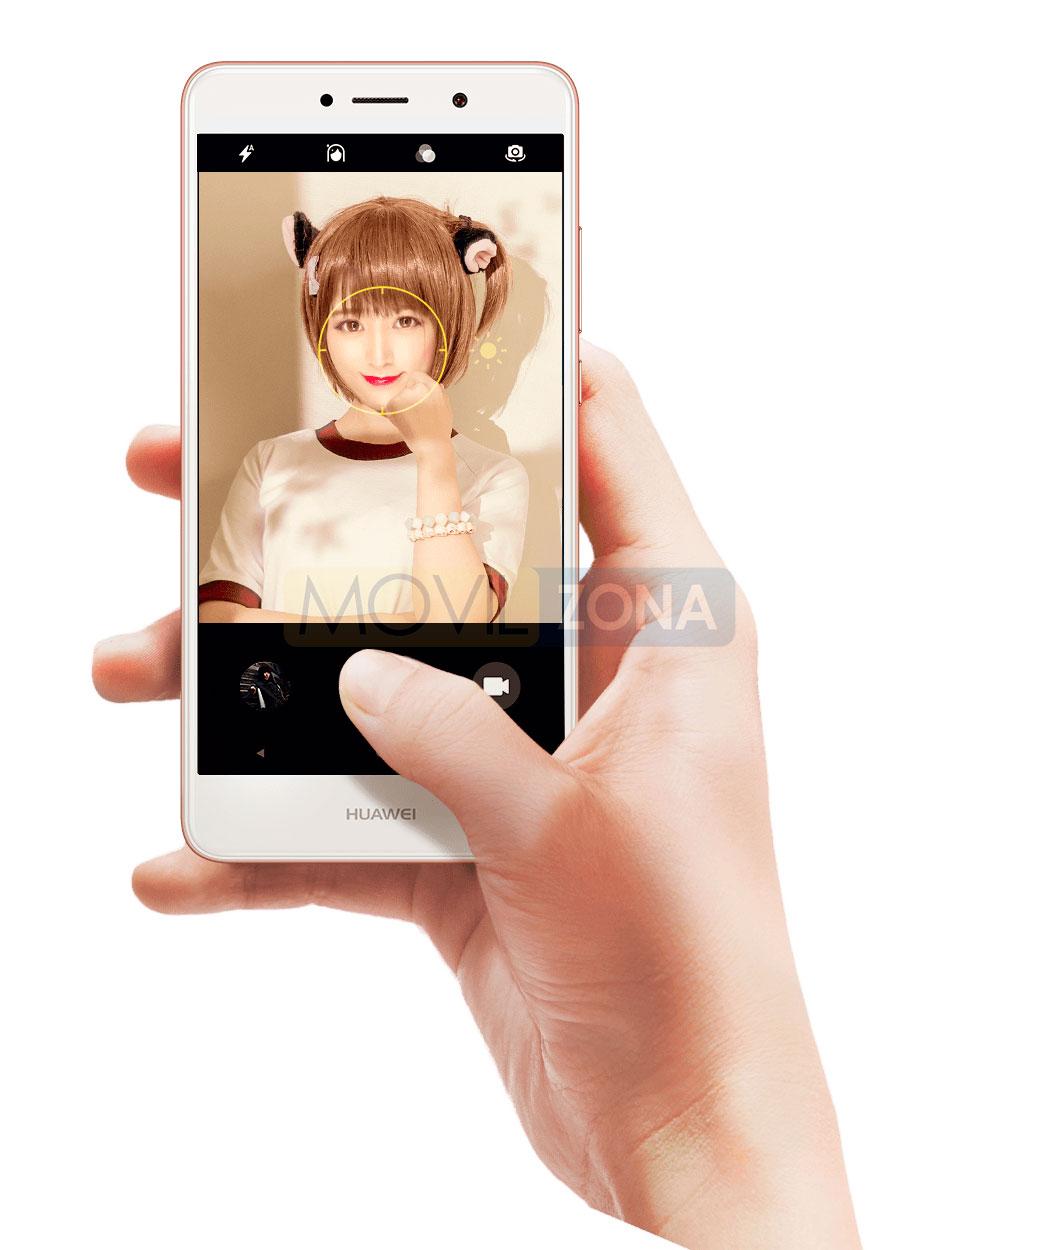 Huawei Enjoy 7 Plus con chica en pantalla